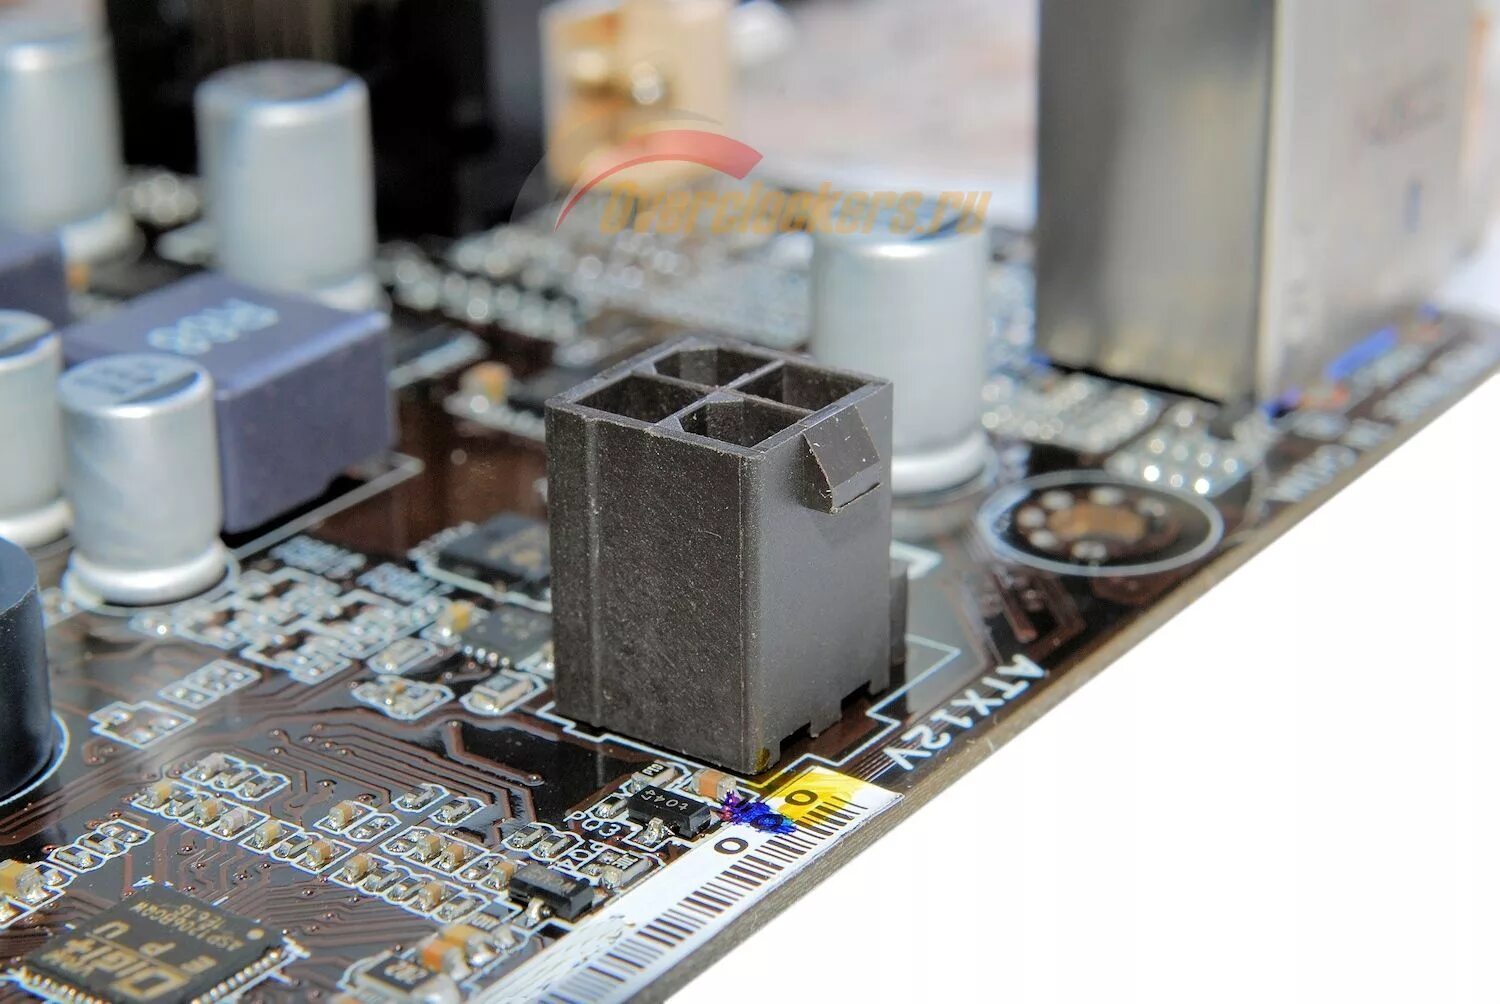 ASUS a58m-k. Радиатор WRM питания процессора 2011. Питание процессора ТВ приставки. Trony t-crt1500 питание процессора. Монитор питания процессора